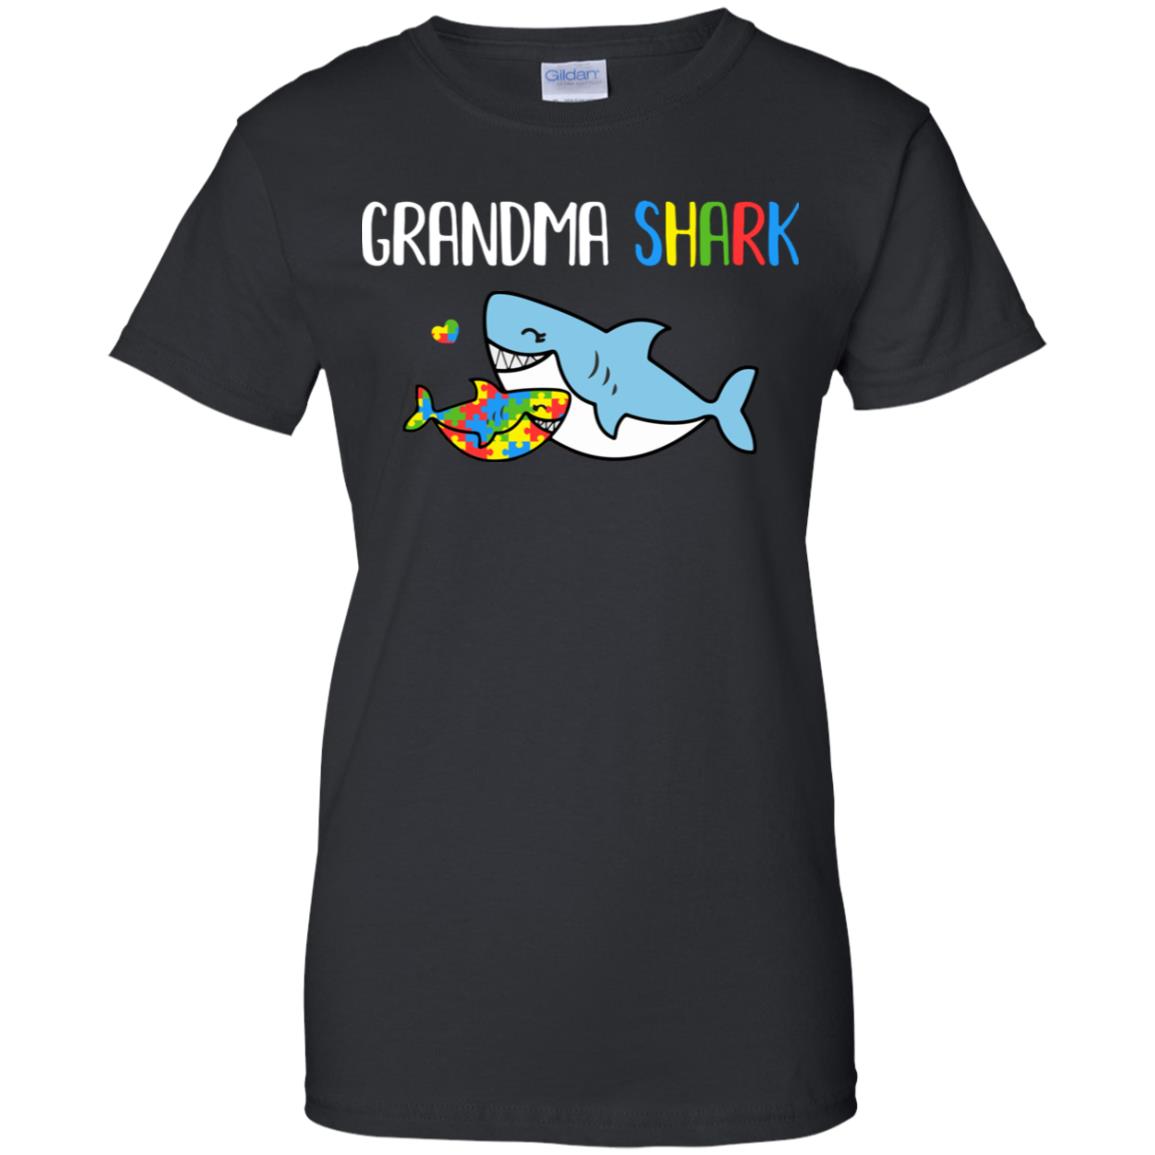 Grandma Shark Support Autism Awareness for Grandchild Gift T-shirts Women's Tees Black/X-Small